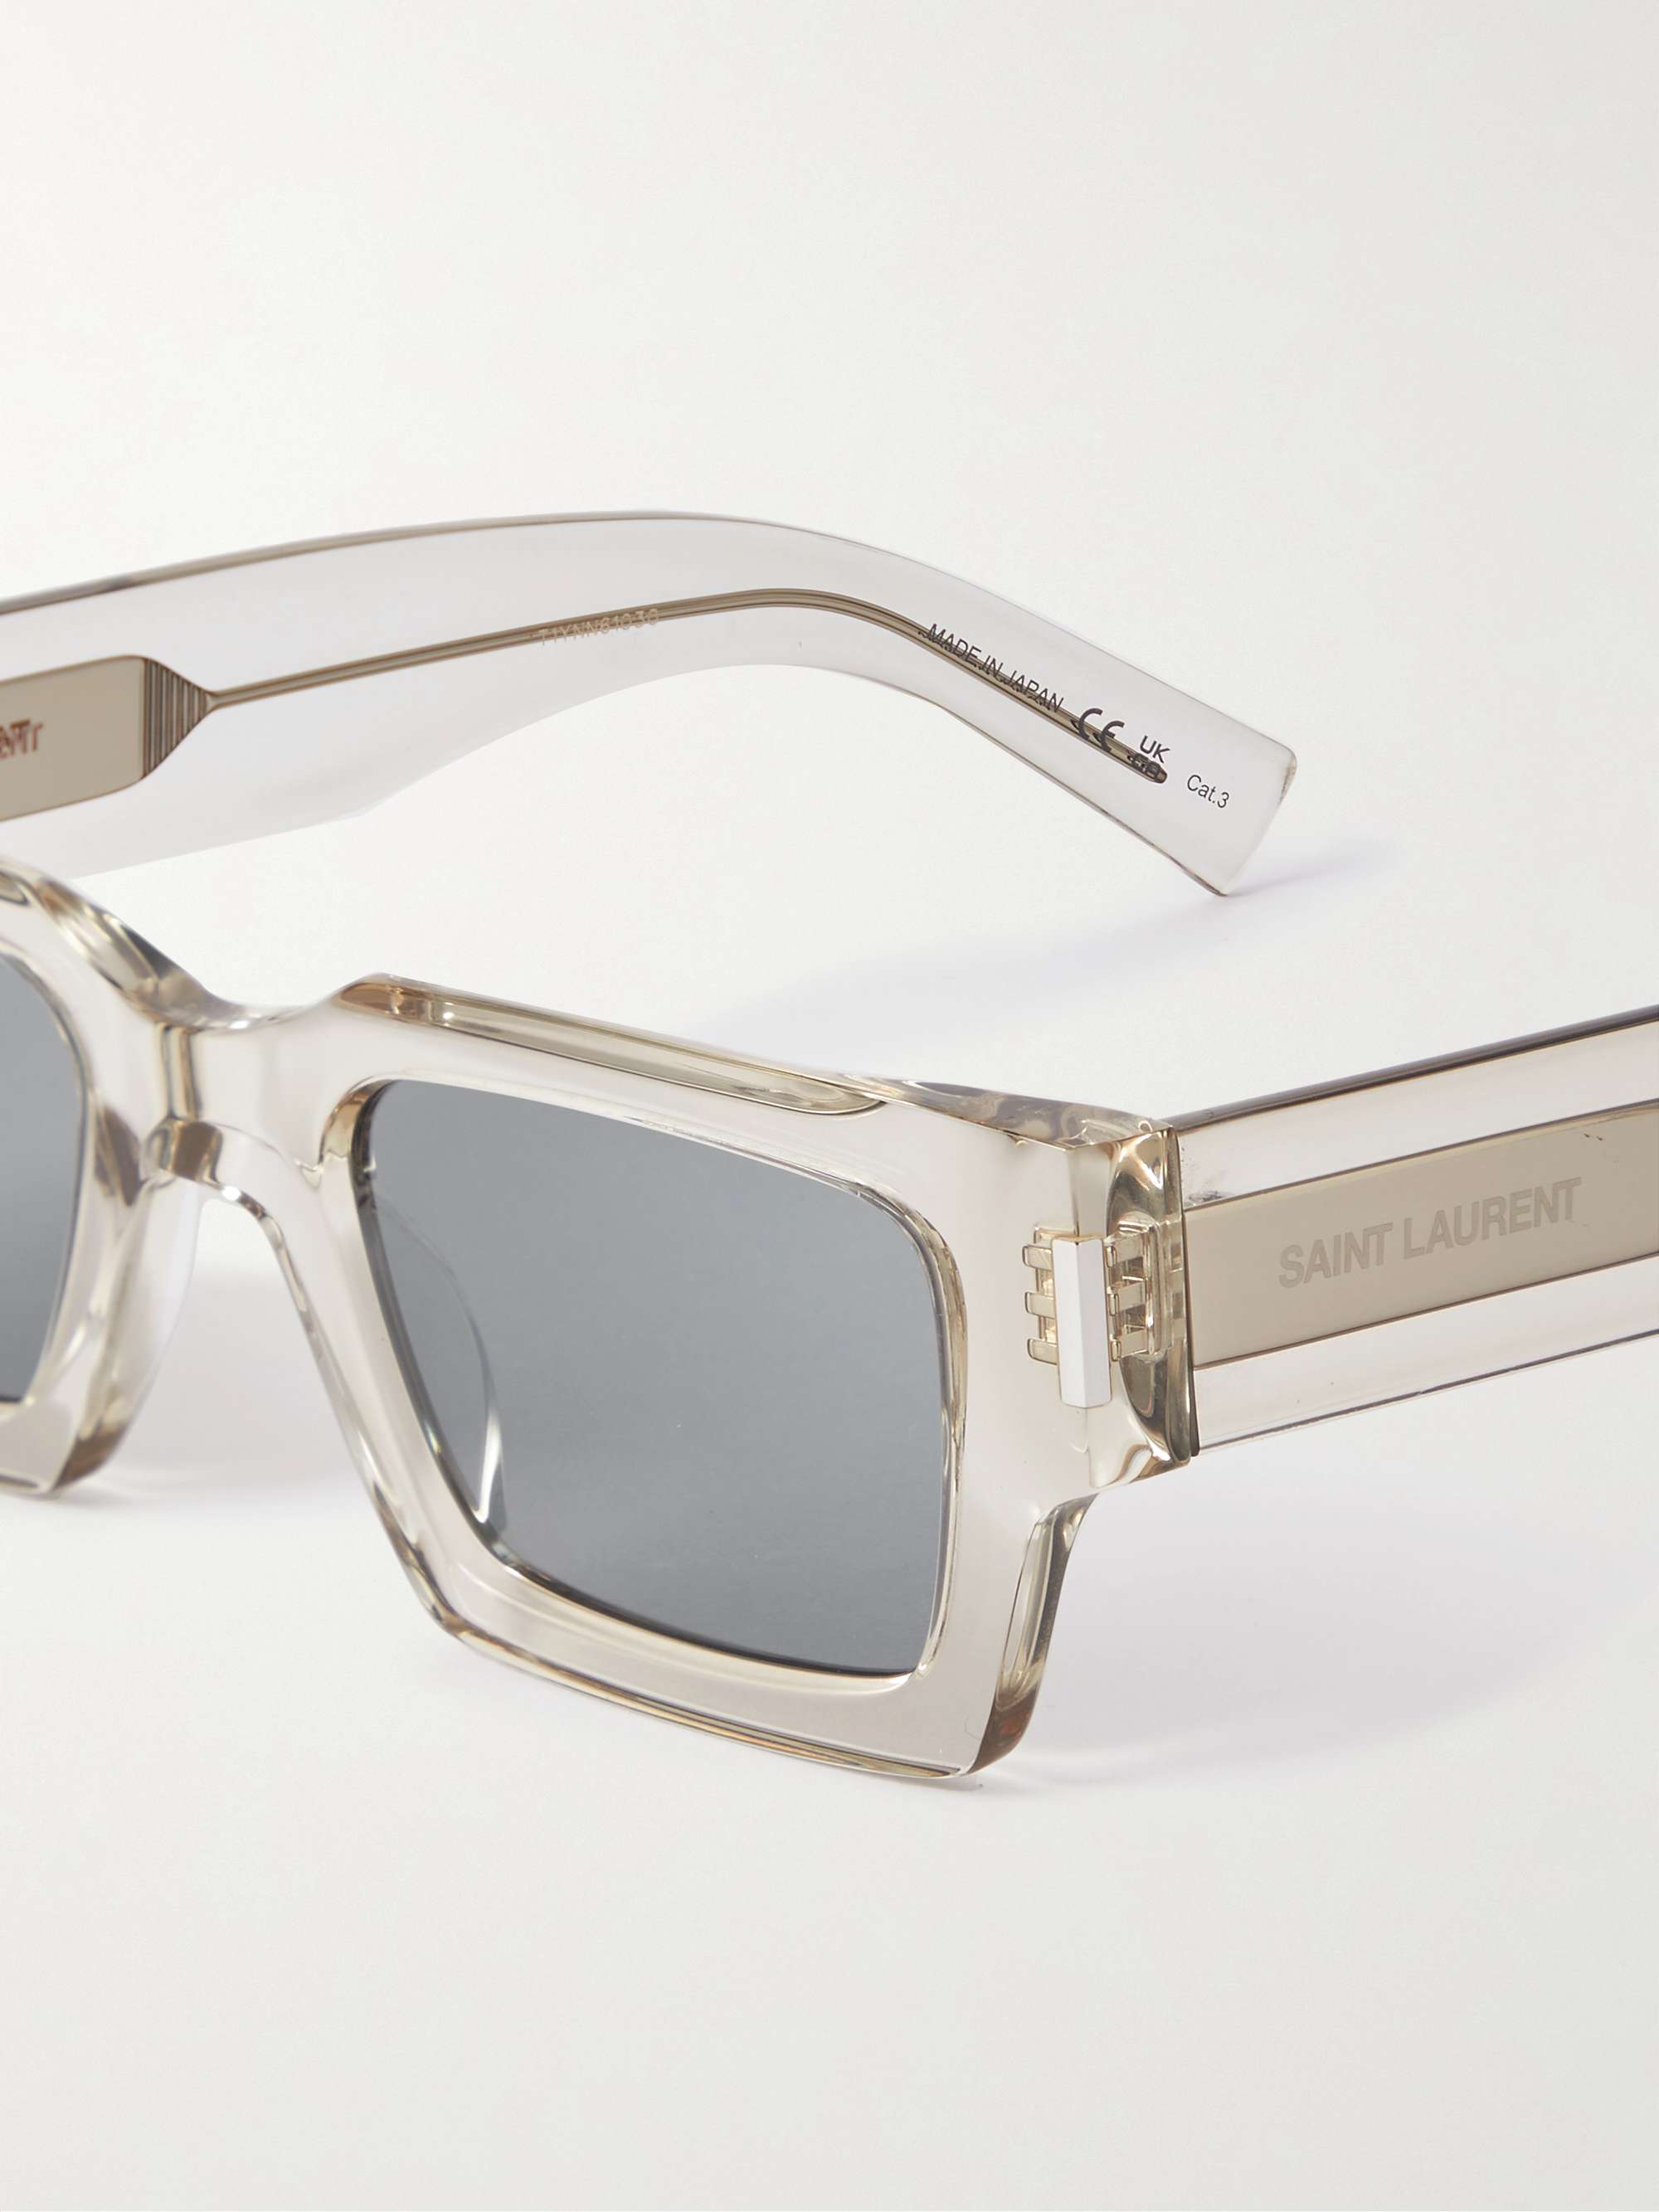 SAINT LAURENT EYEWEAR Rectangular-Frame Acetate Sunglasses